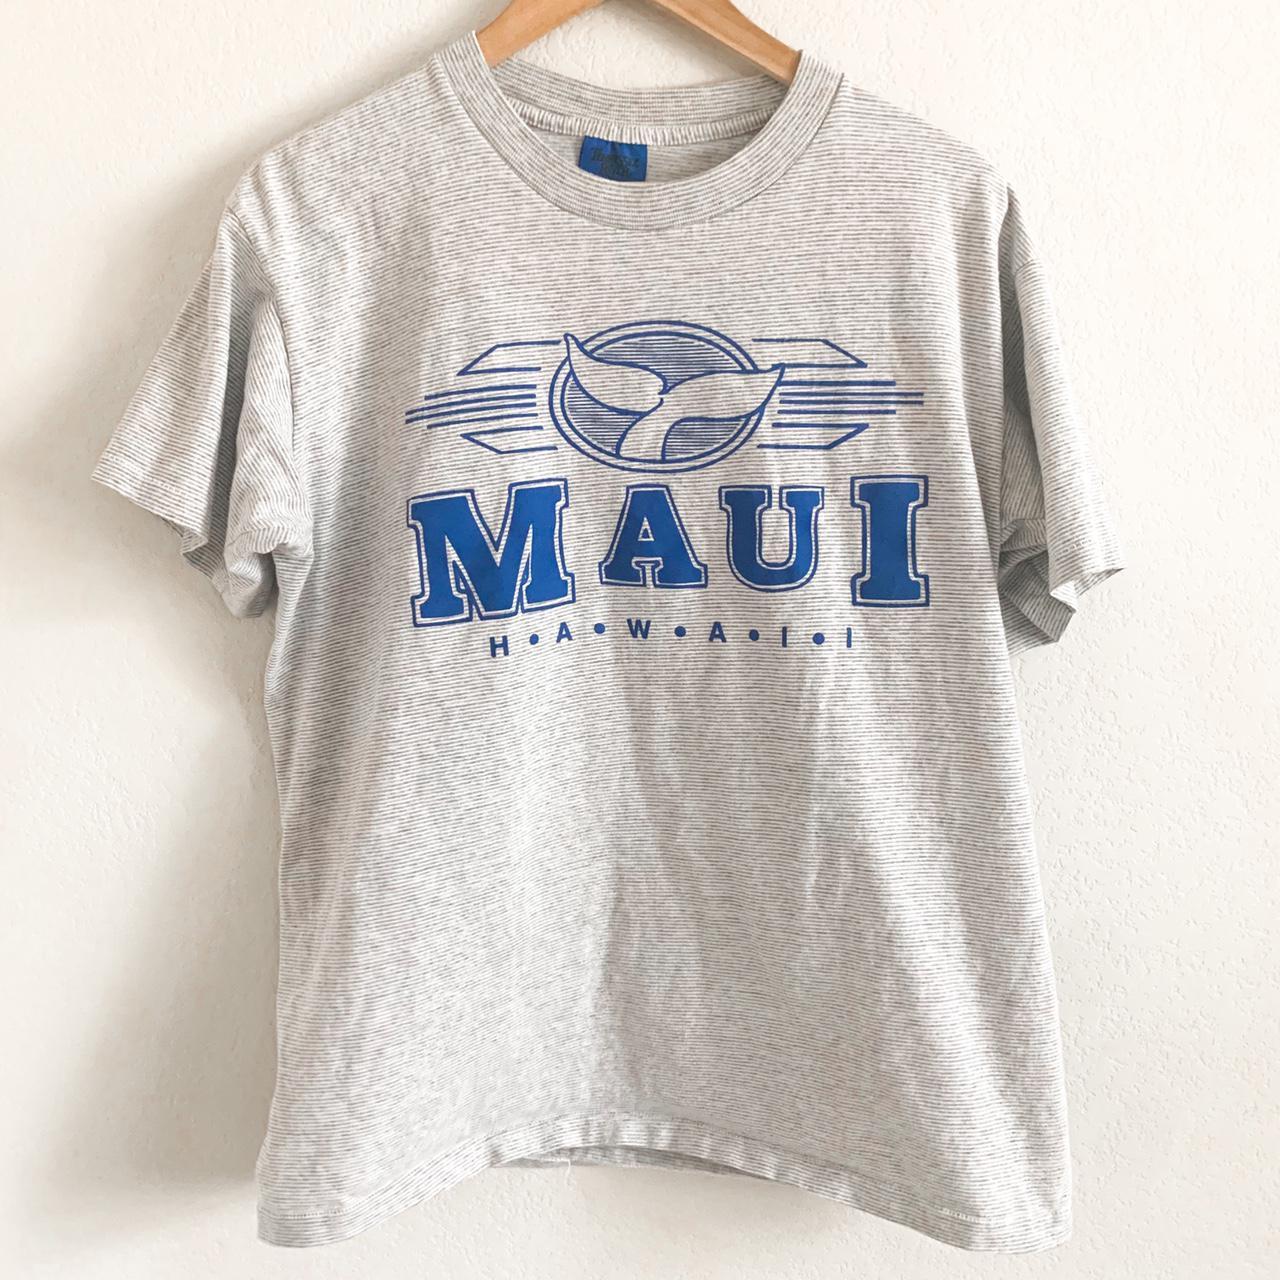 Product Image 2 - •Vintage 90’s Maui, Hawaii striped